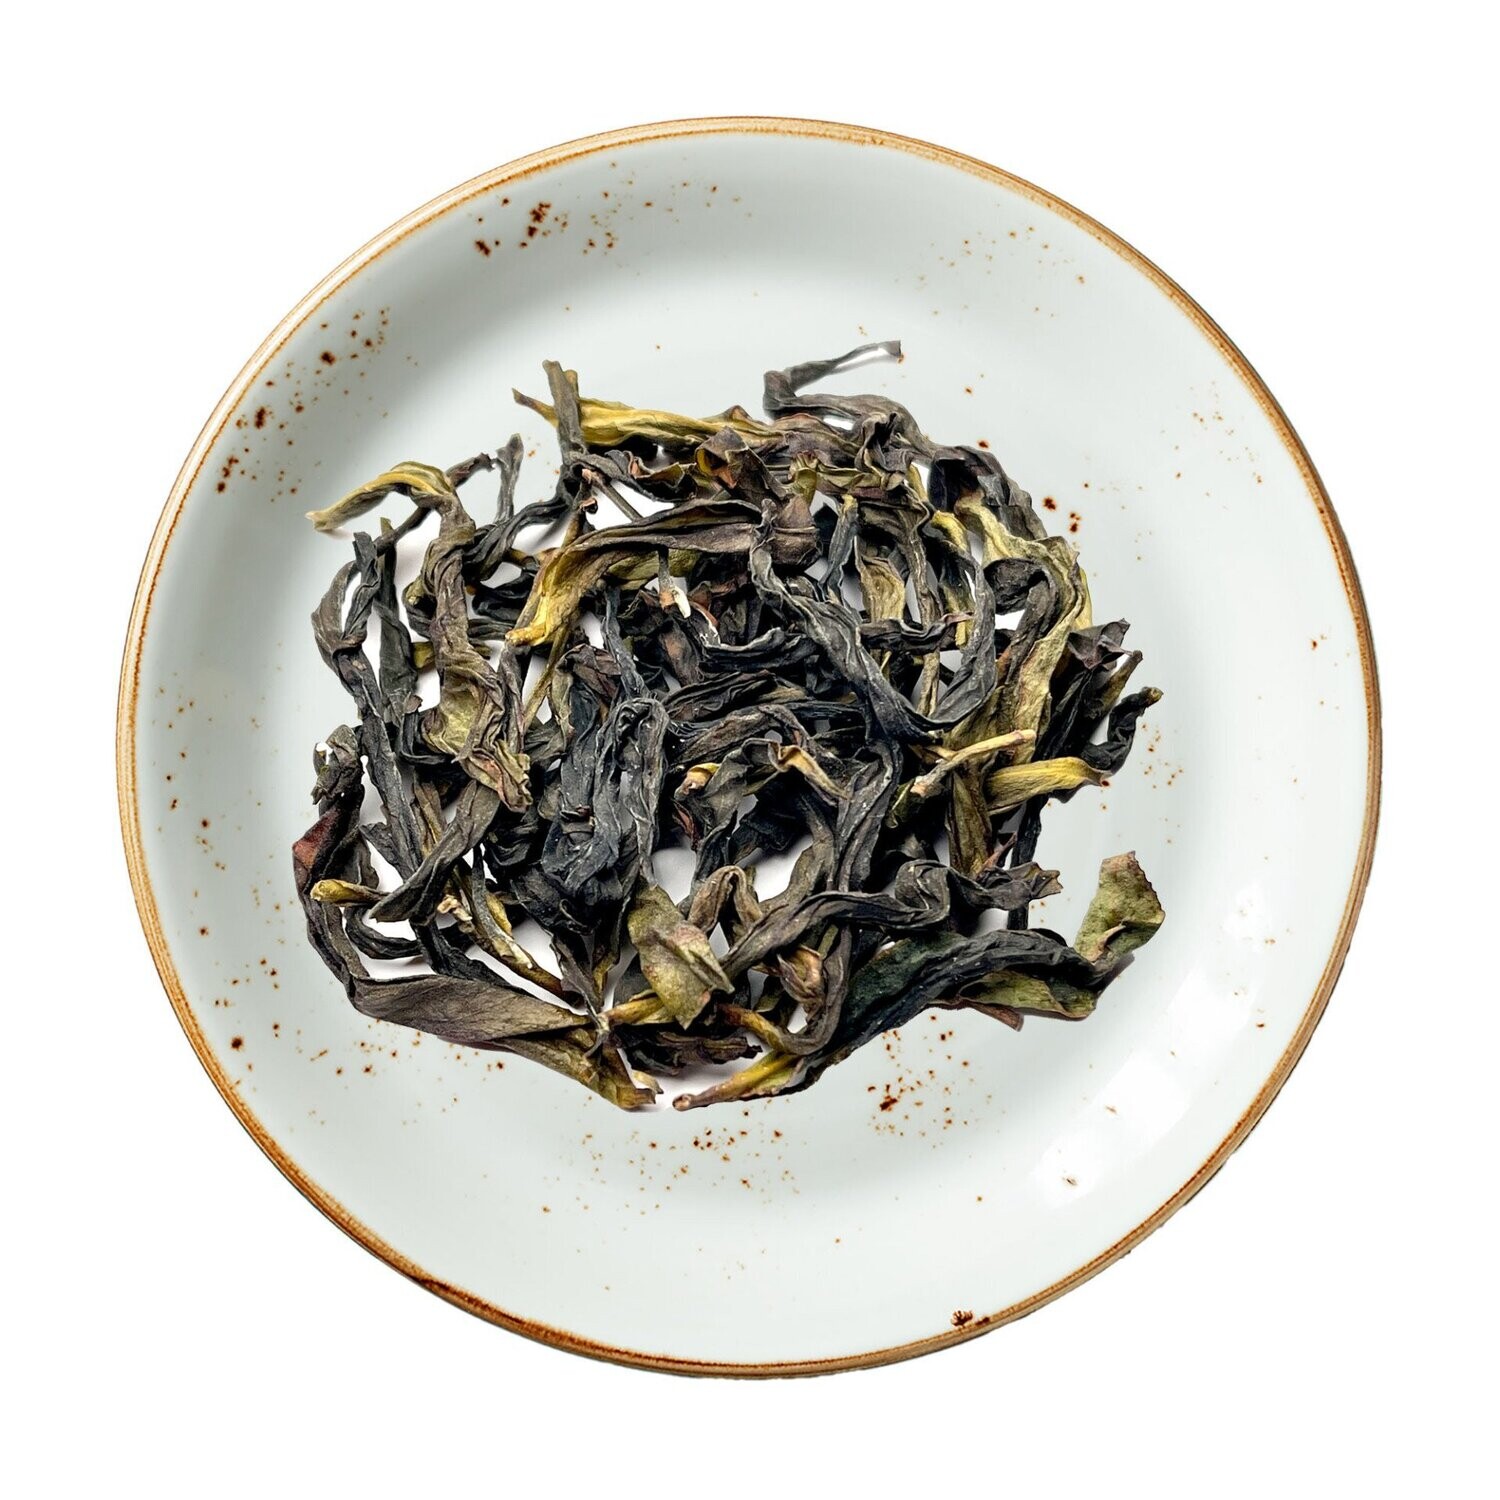 Xue Ya Shi Xiang (Winter Duck Poop) Oolong Tea, Size: One Ounce (28 grams), Harvest Year: 2023